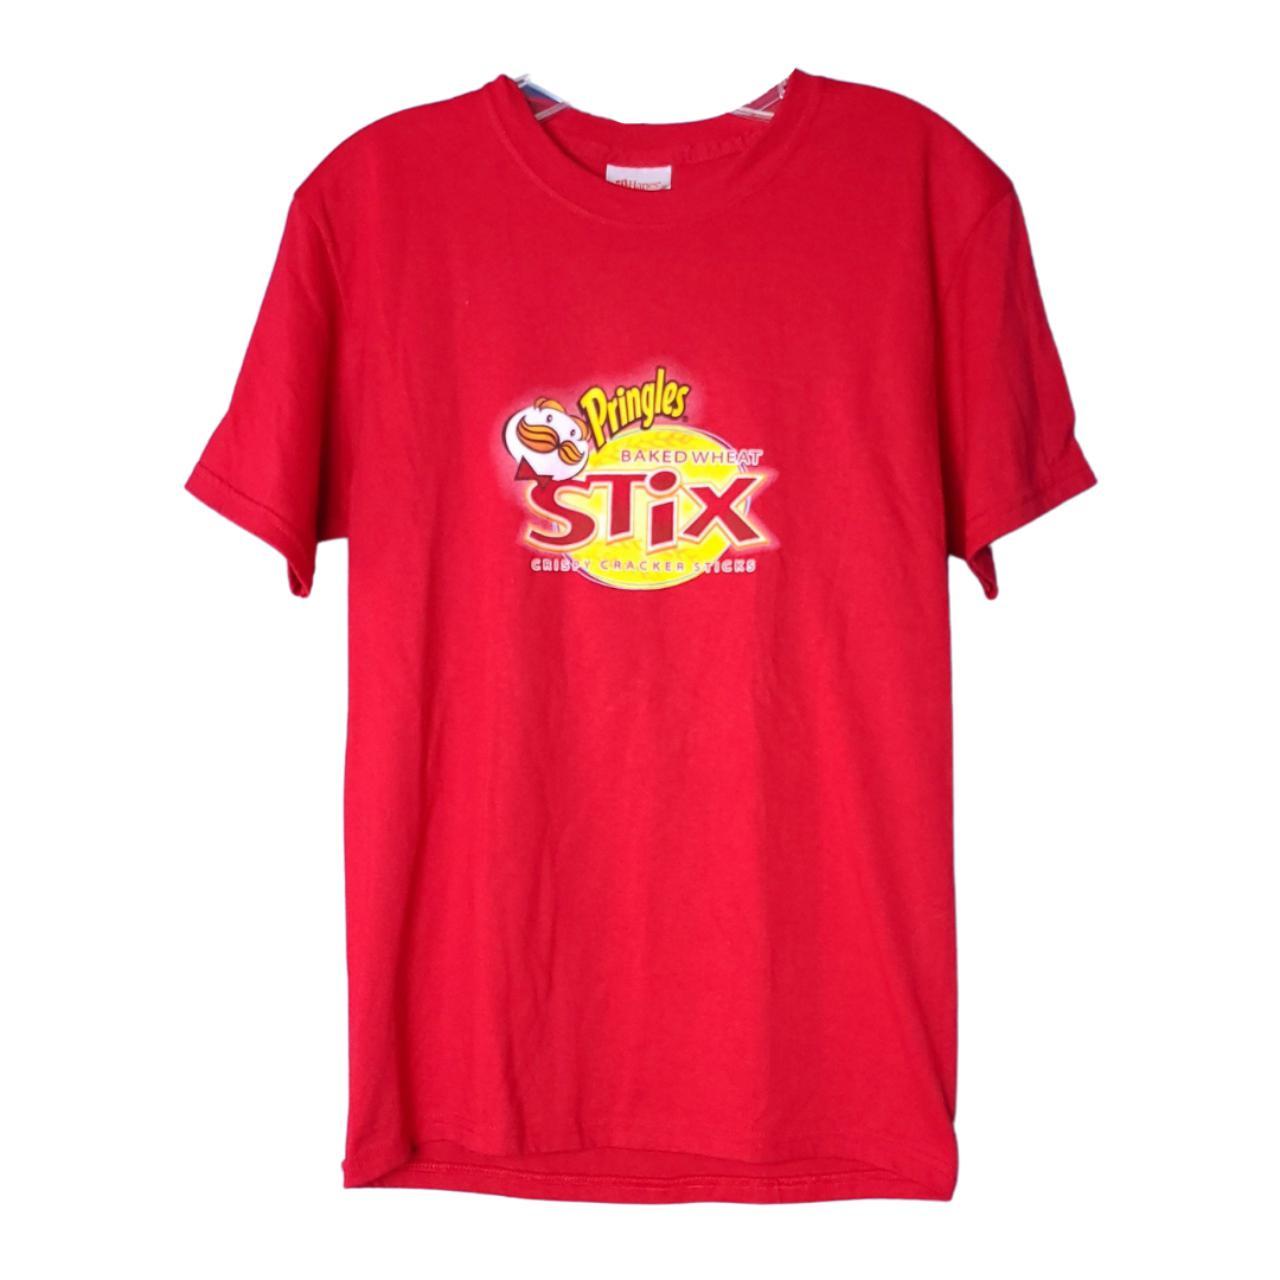 Product Image 1 - Pringles Stix Snack T-Shirt

Details: 
Size: